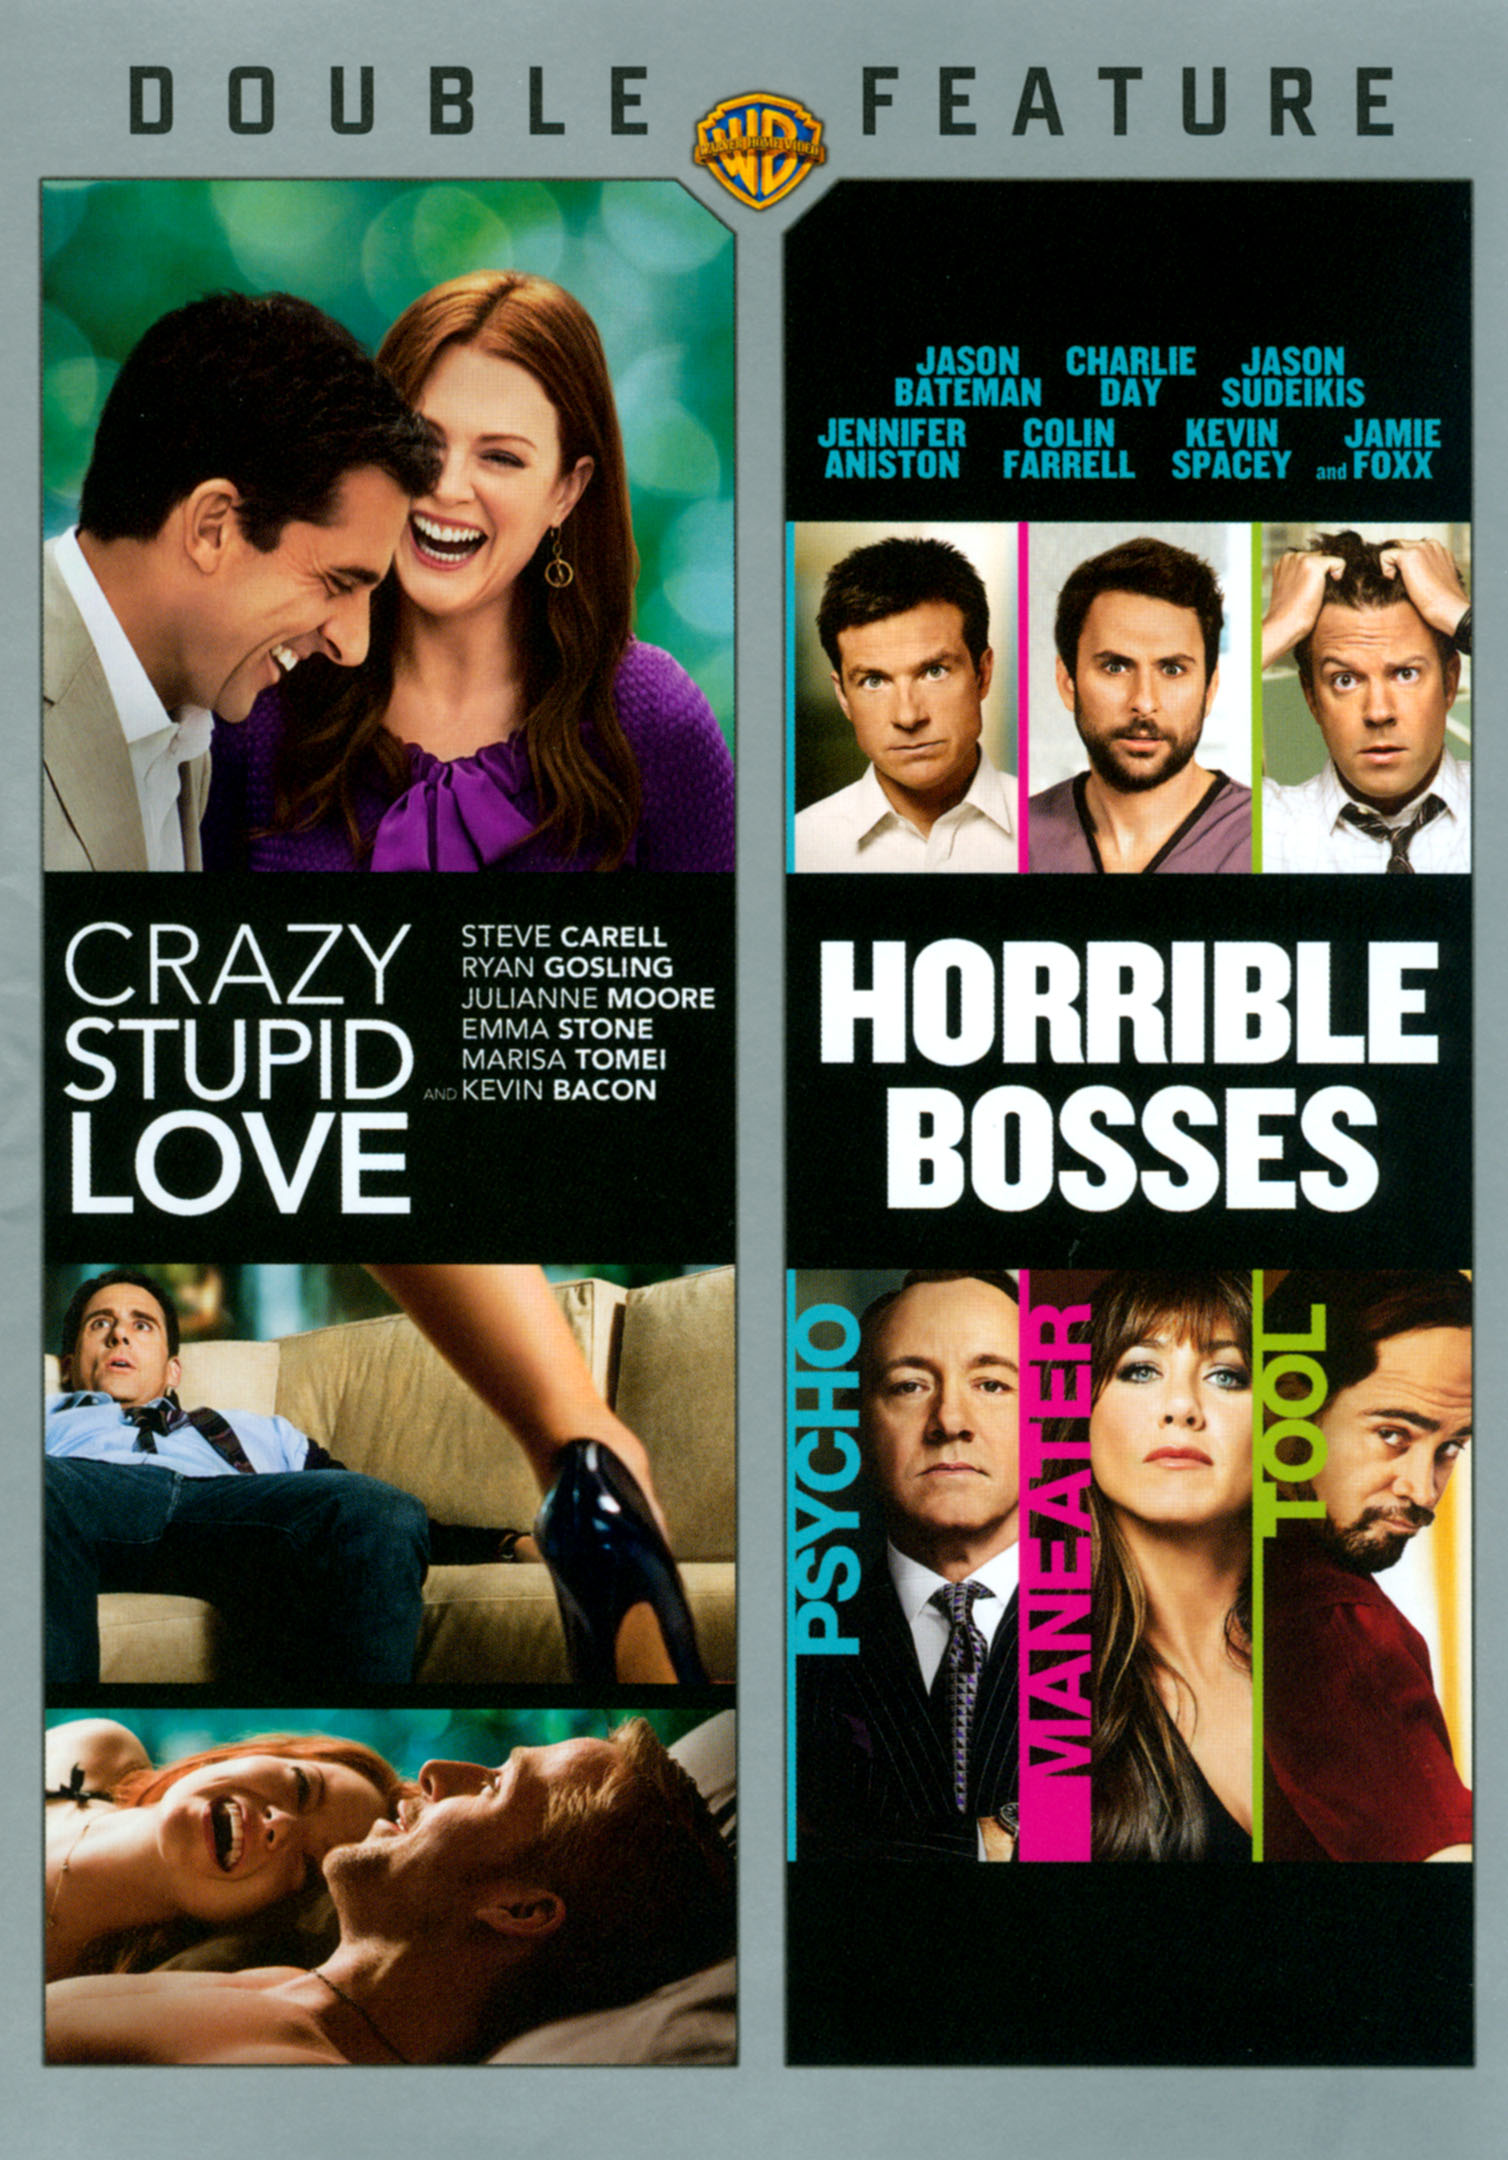 Crazy Stupid Love [Blu-ray] [2011] - Best Buy